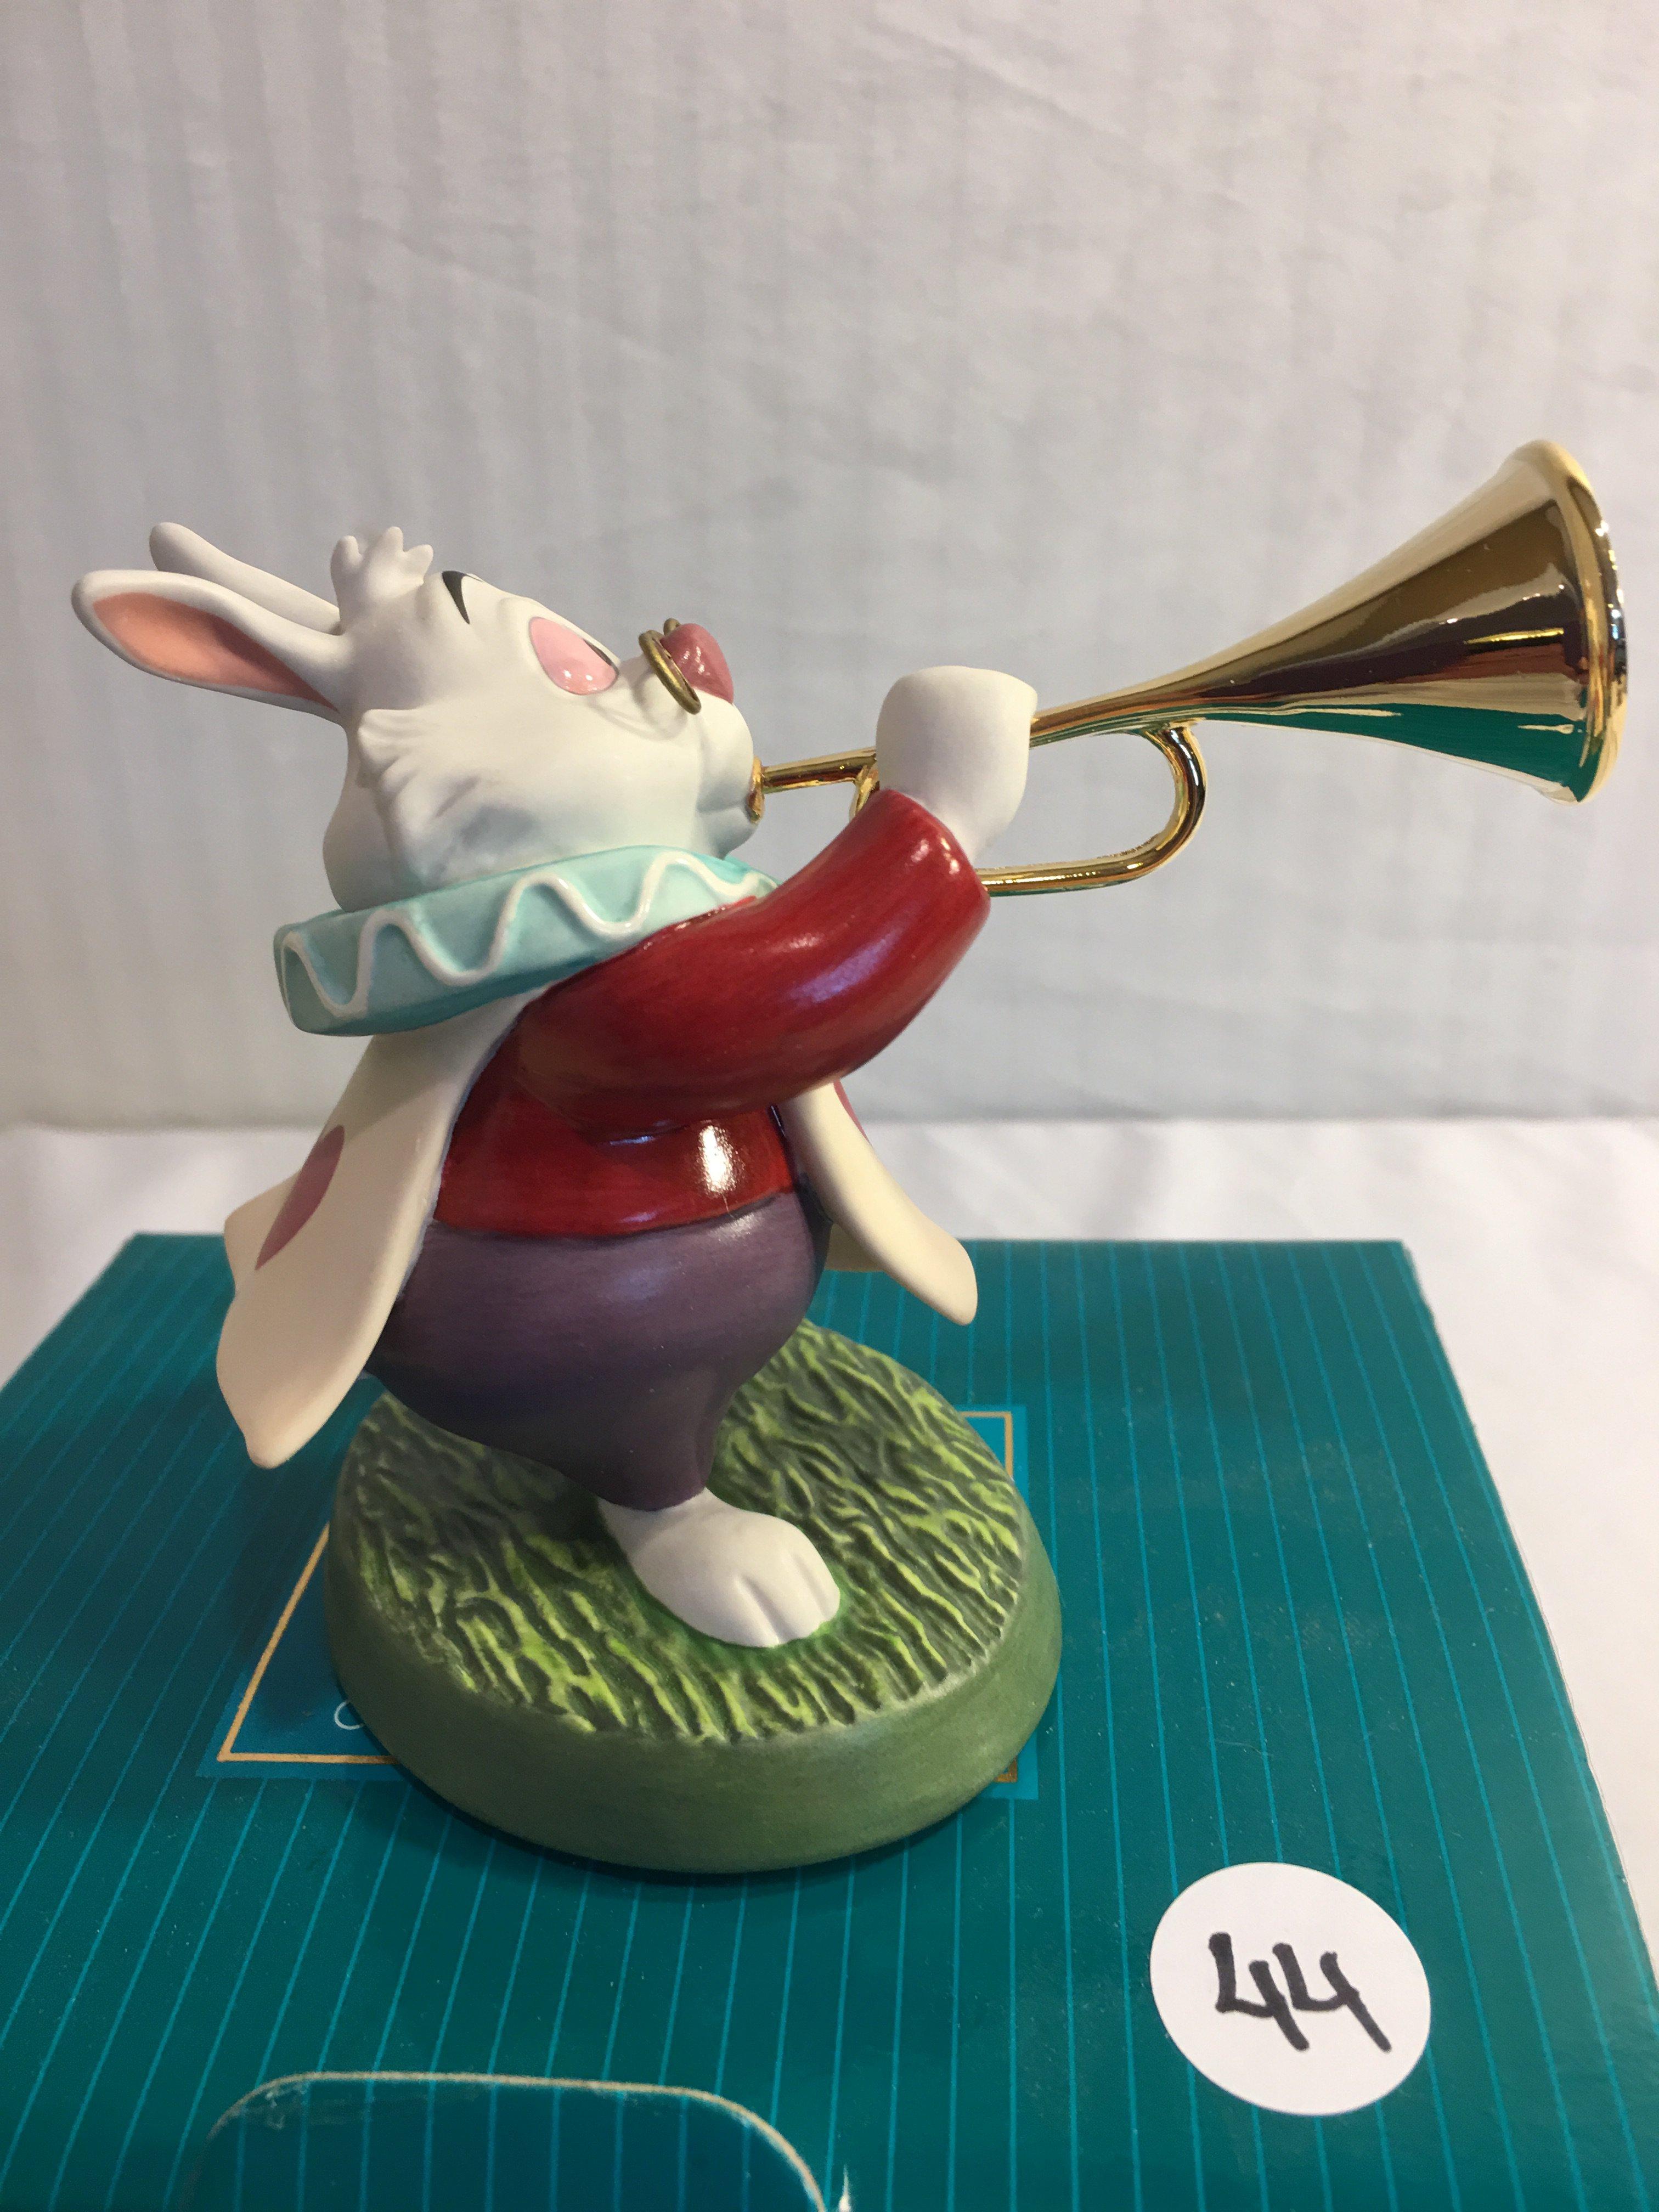 Collector Classics Walt Disney Collection "White Rabbit Le Lapin Blanc "White Rabbit" 4.5x6"